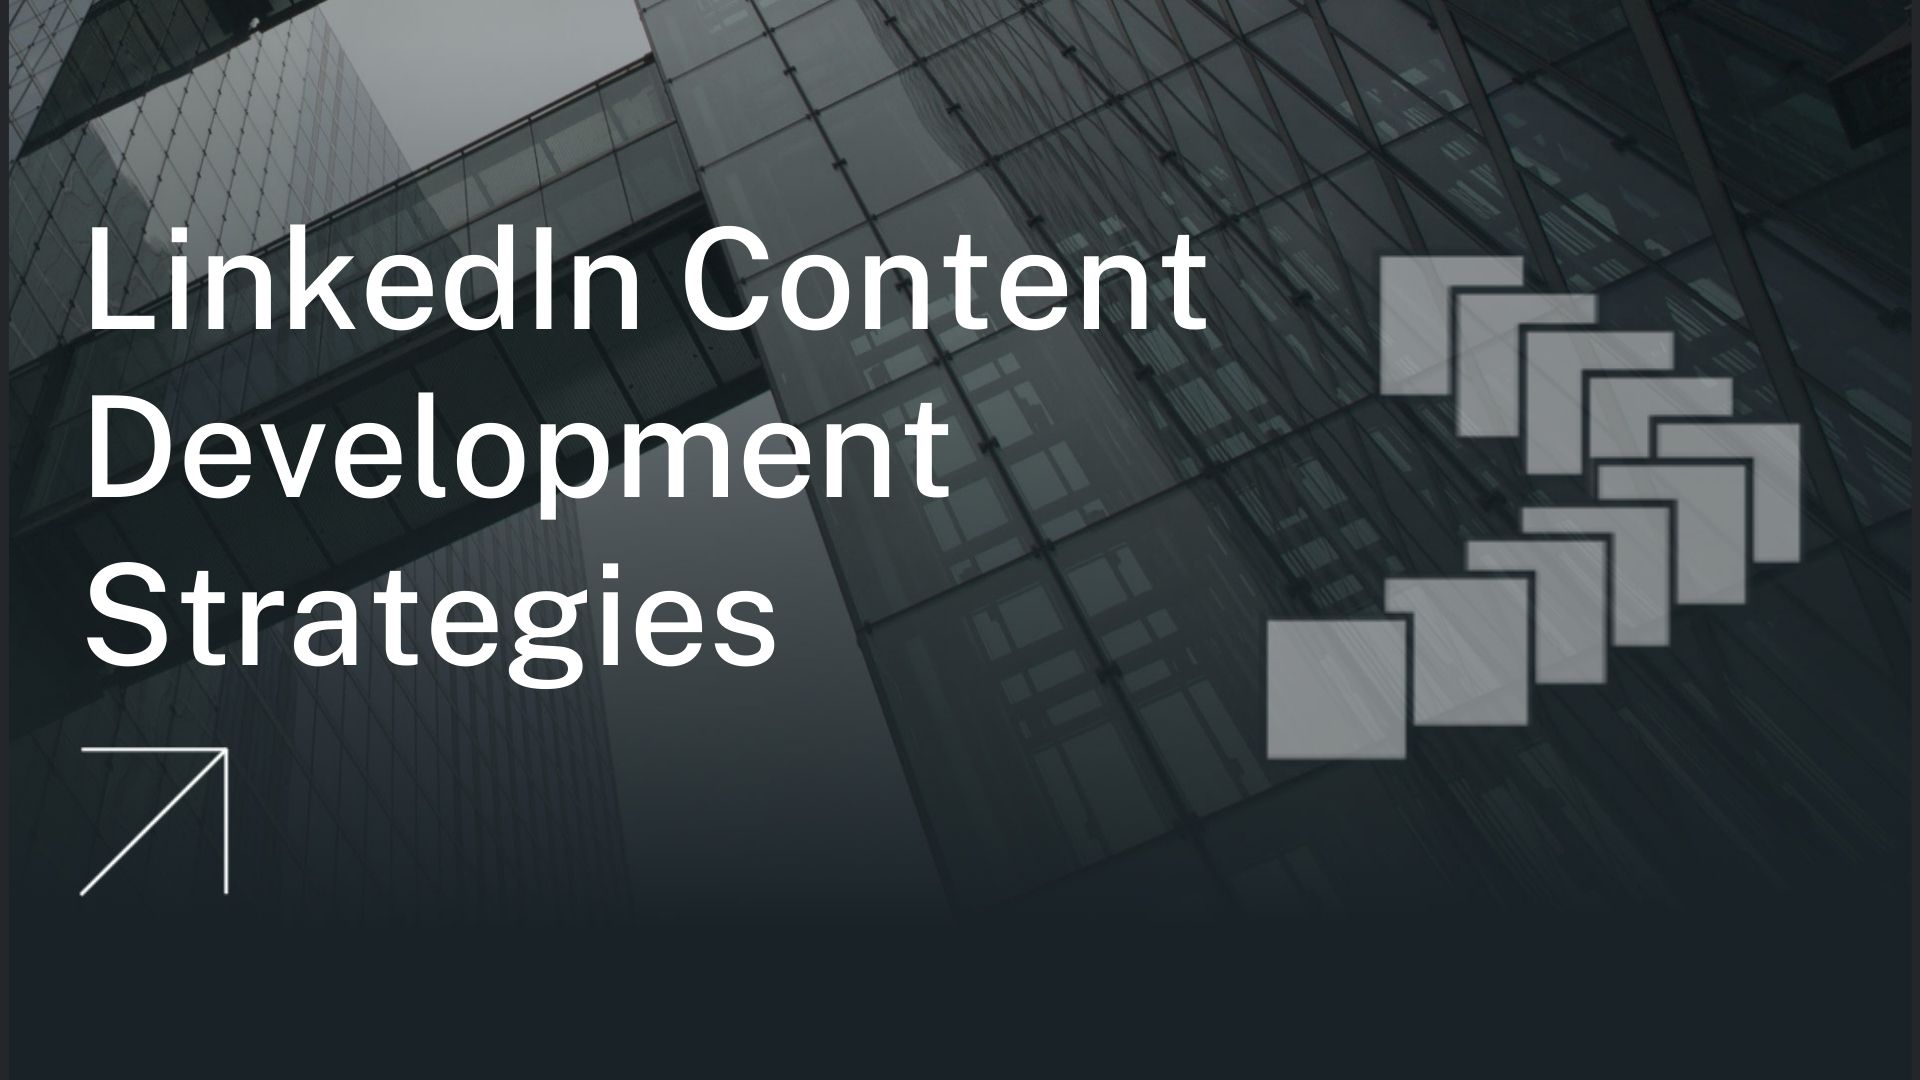 LinkedIn Content Development Strategies